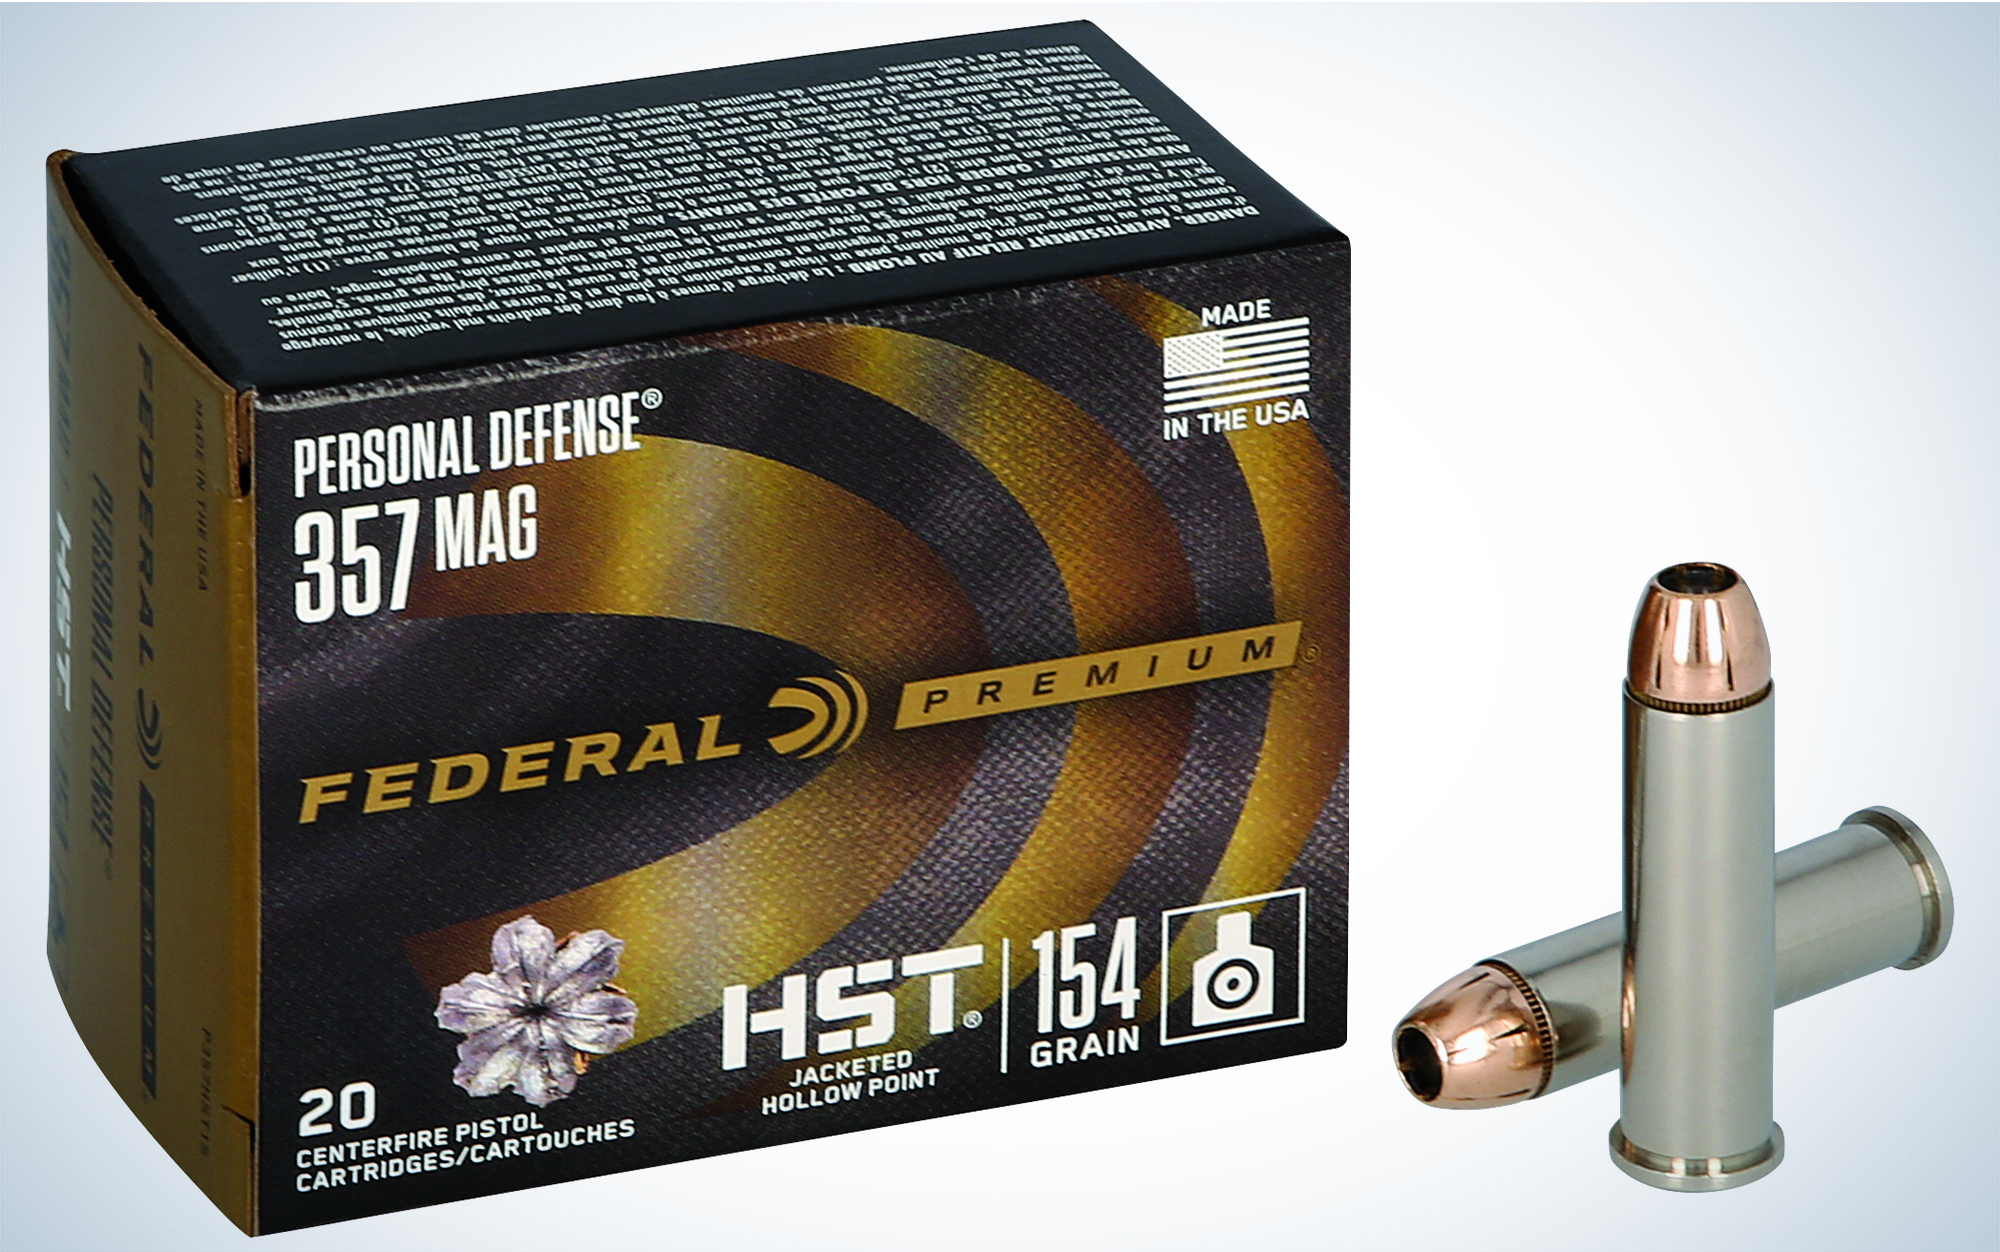 Federal Premium Personal Defense 154 Grain HSTÂ is best for self-defense.